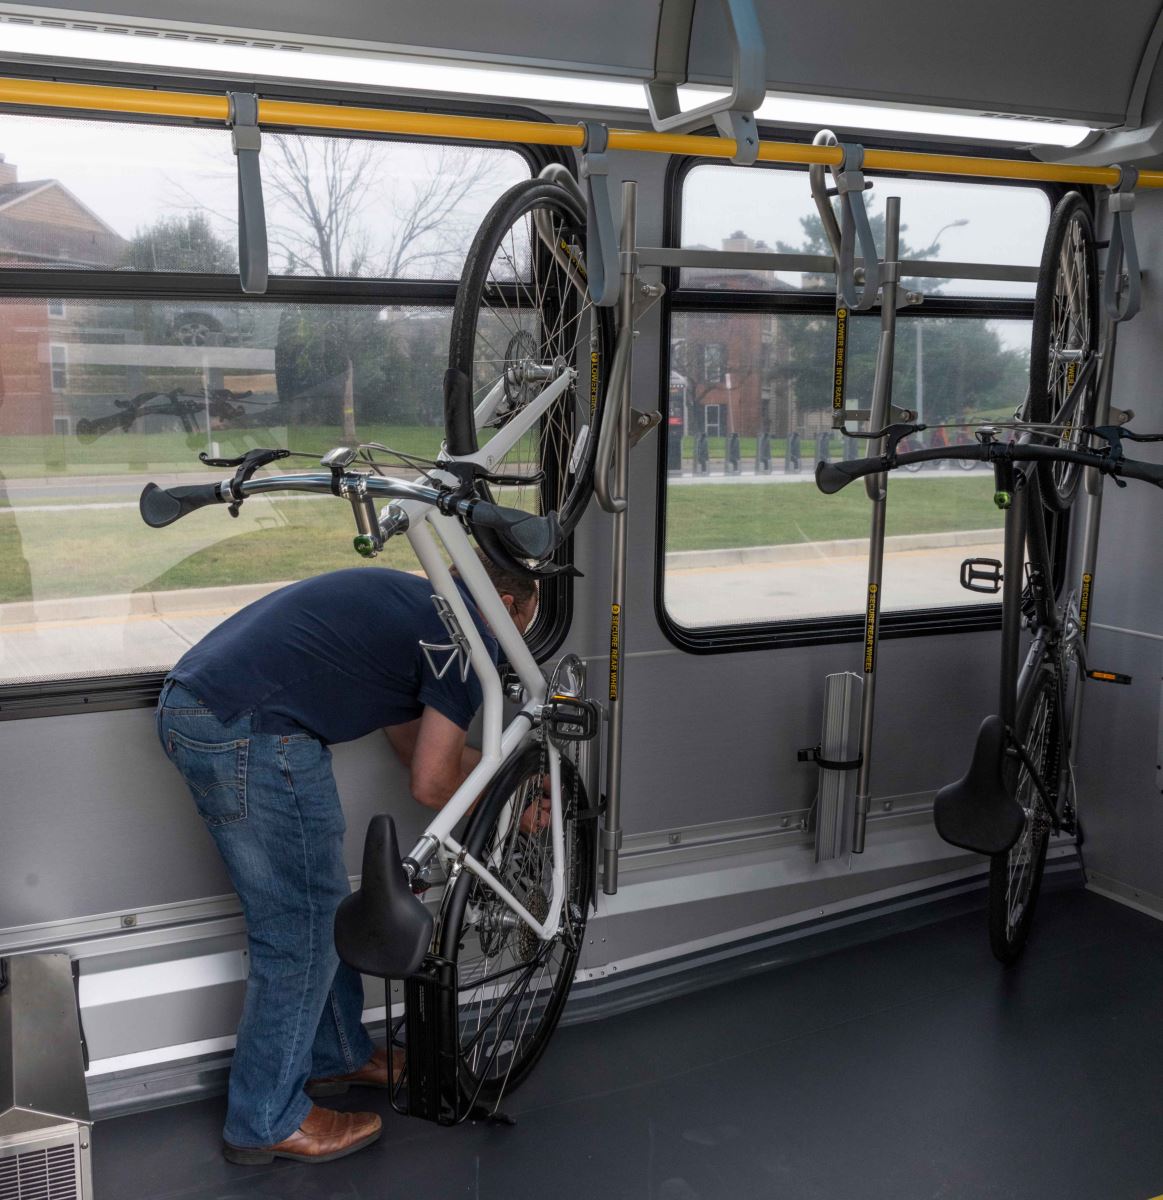 Securing bike on Flash bus